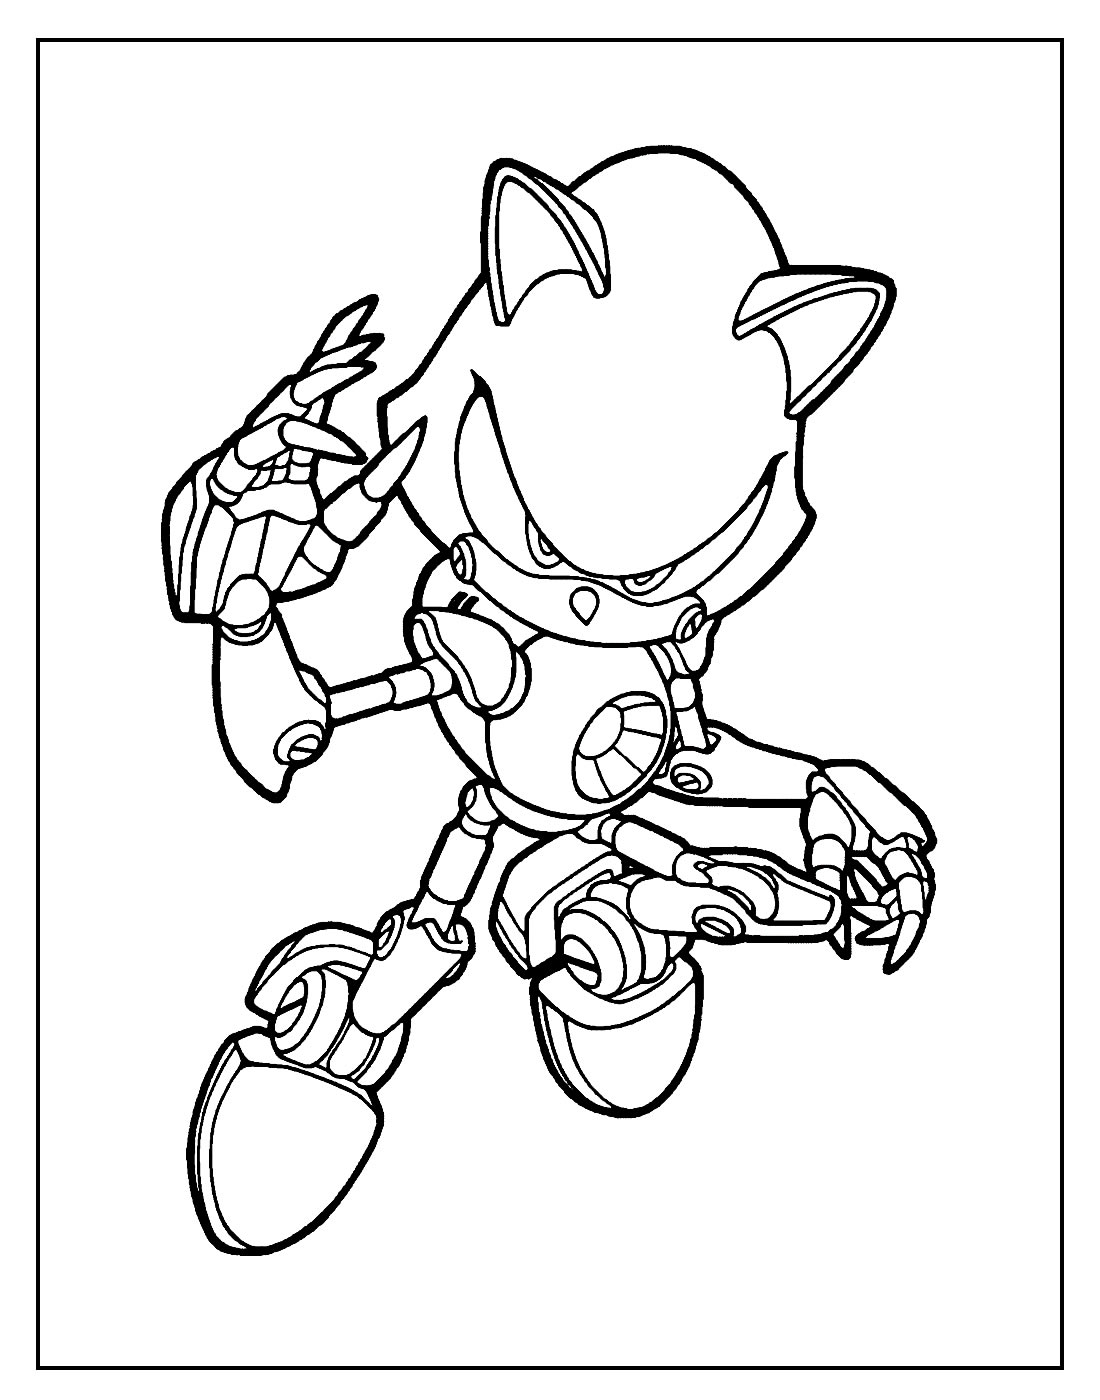 Desenho para colorir de Sonic